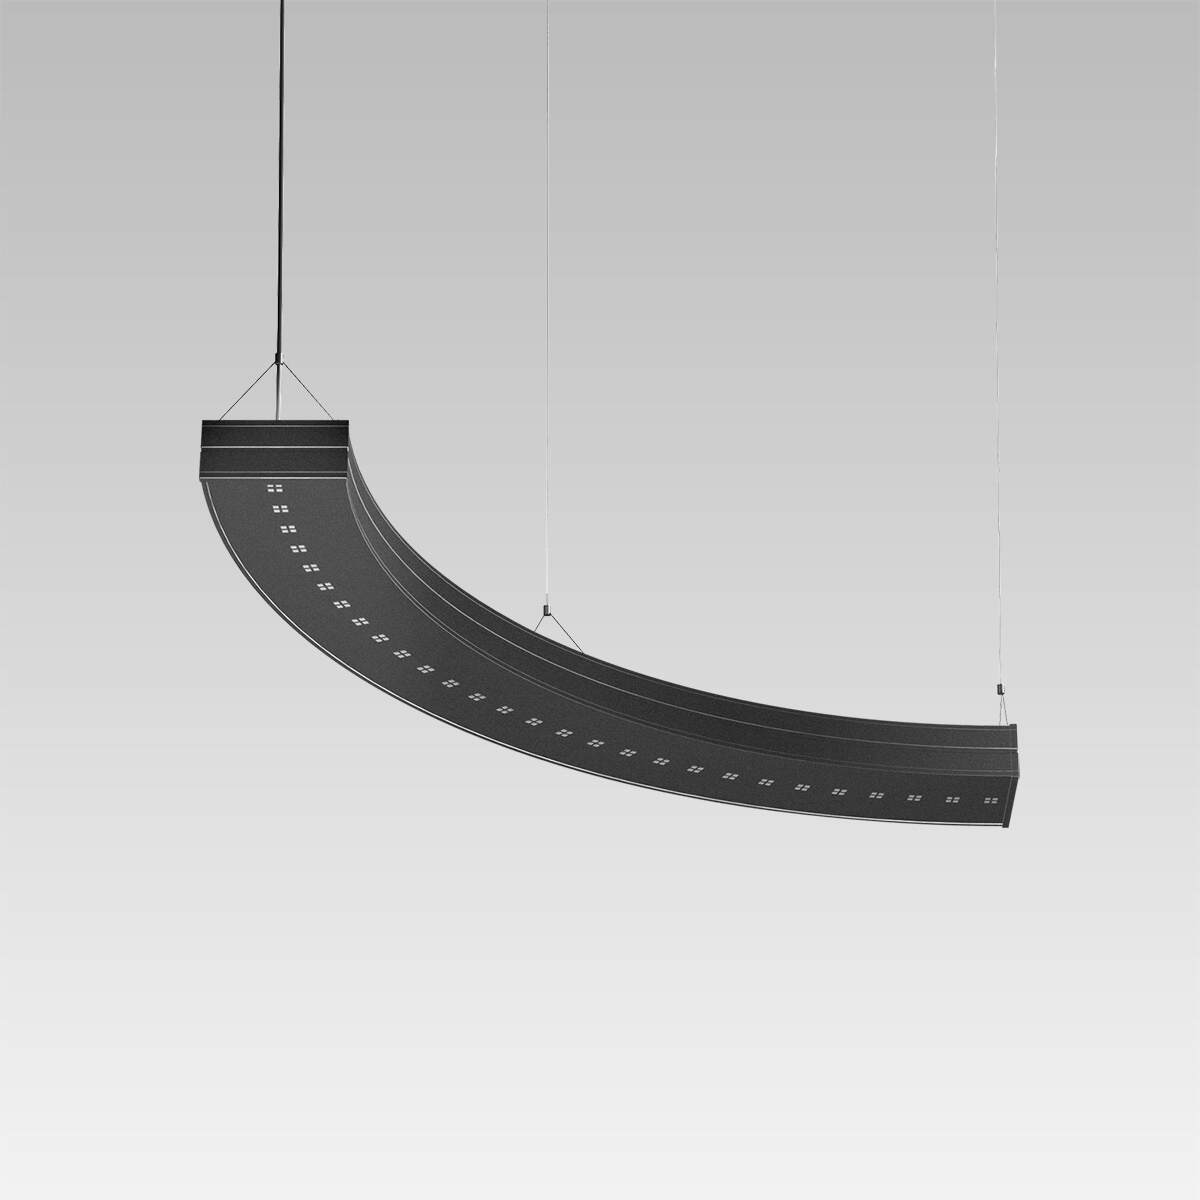 A circular indirect pendant segment